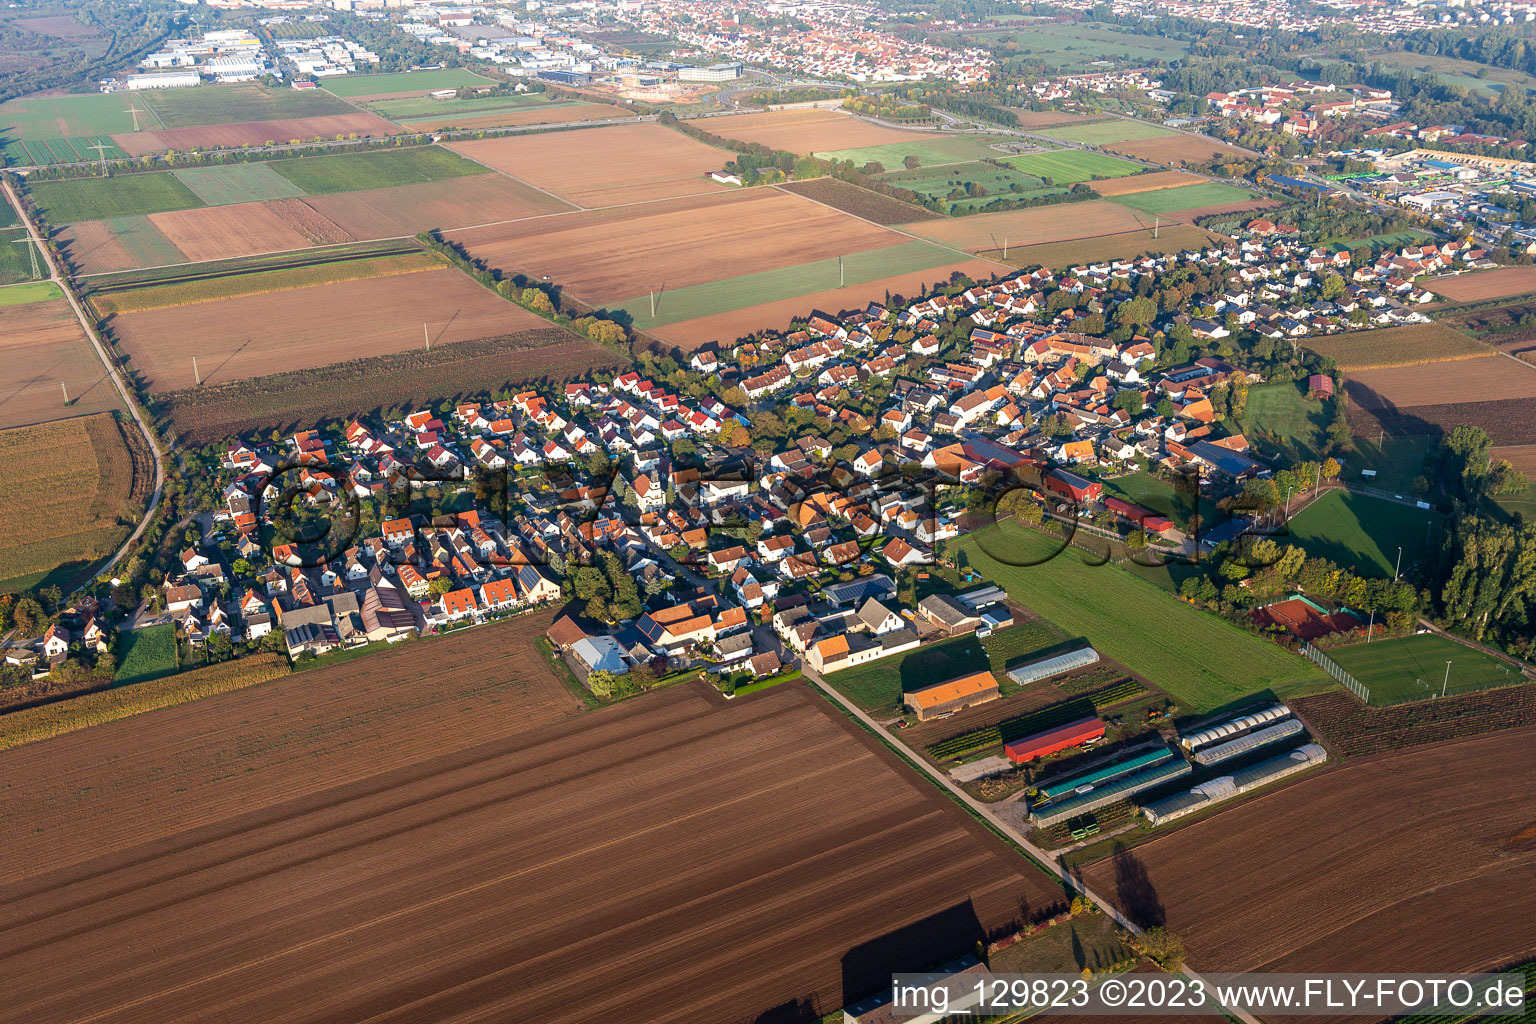 District Mörlheim in Landau in der Pfalz in the state Rhineland-Palatinate, Germany from the plane